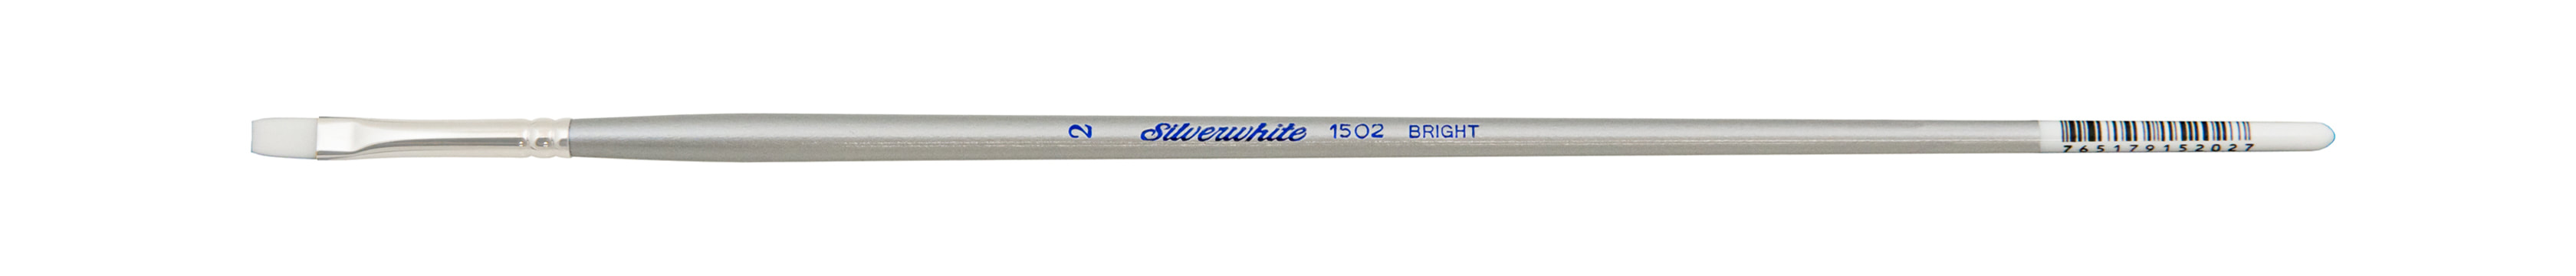 Size 1 Filbert Silver Brush 1503-1 Silverwhite Long Handle White Taklon Brush